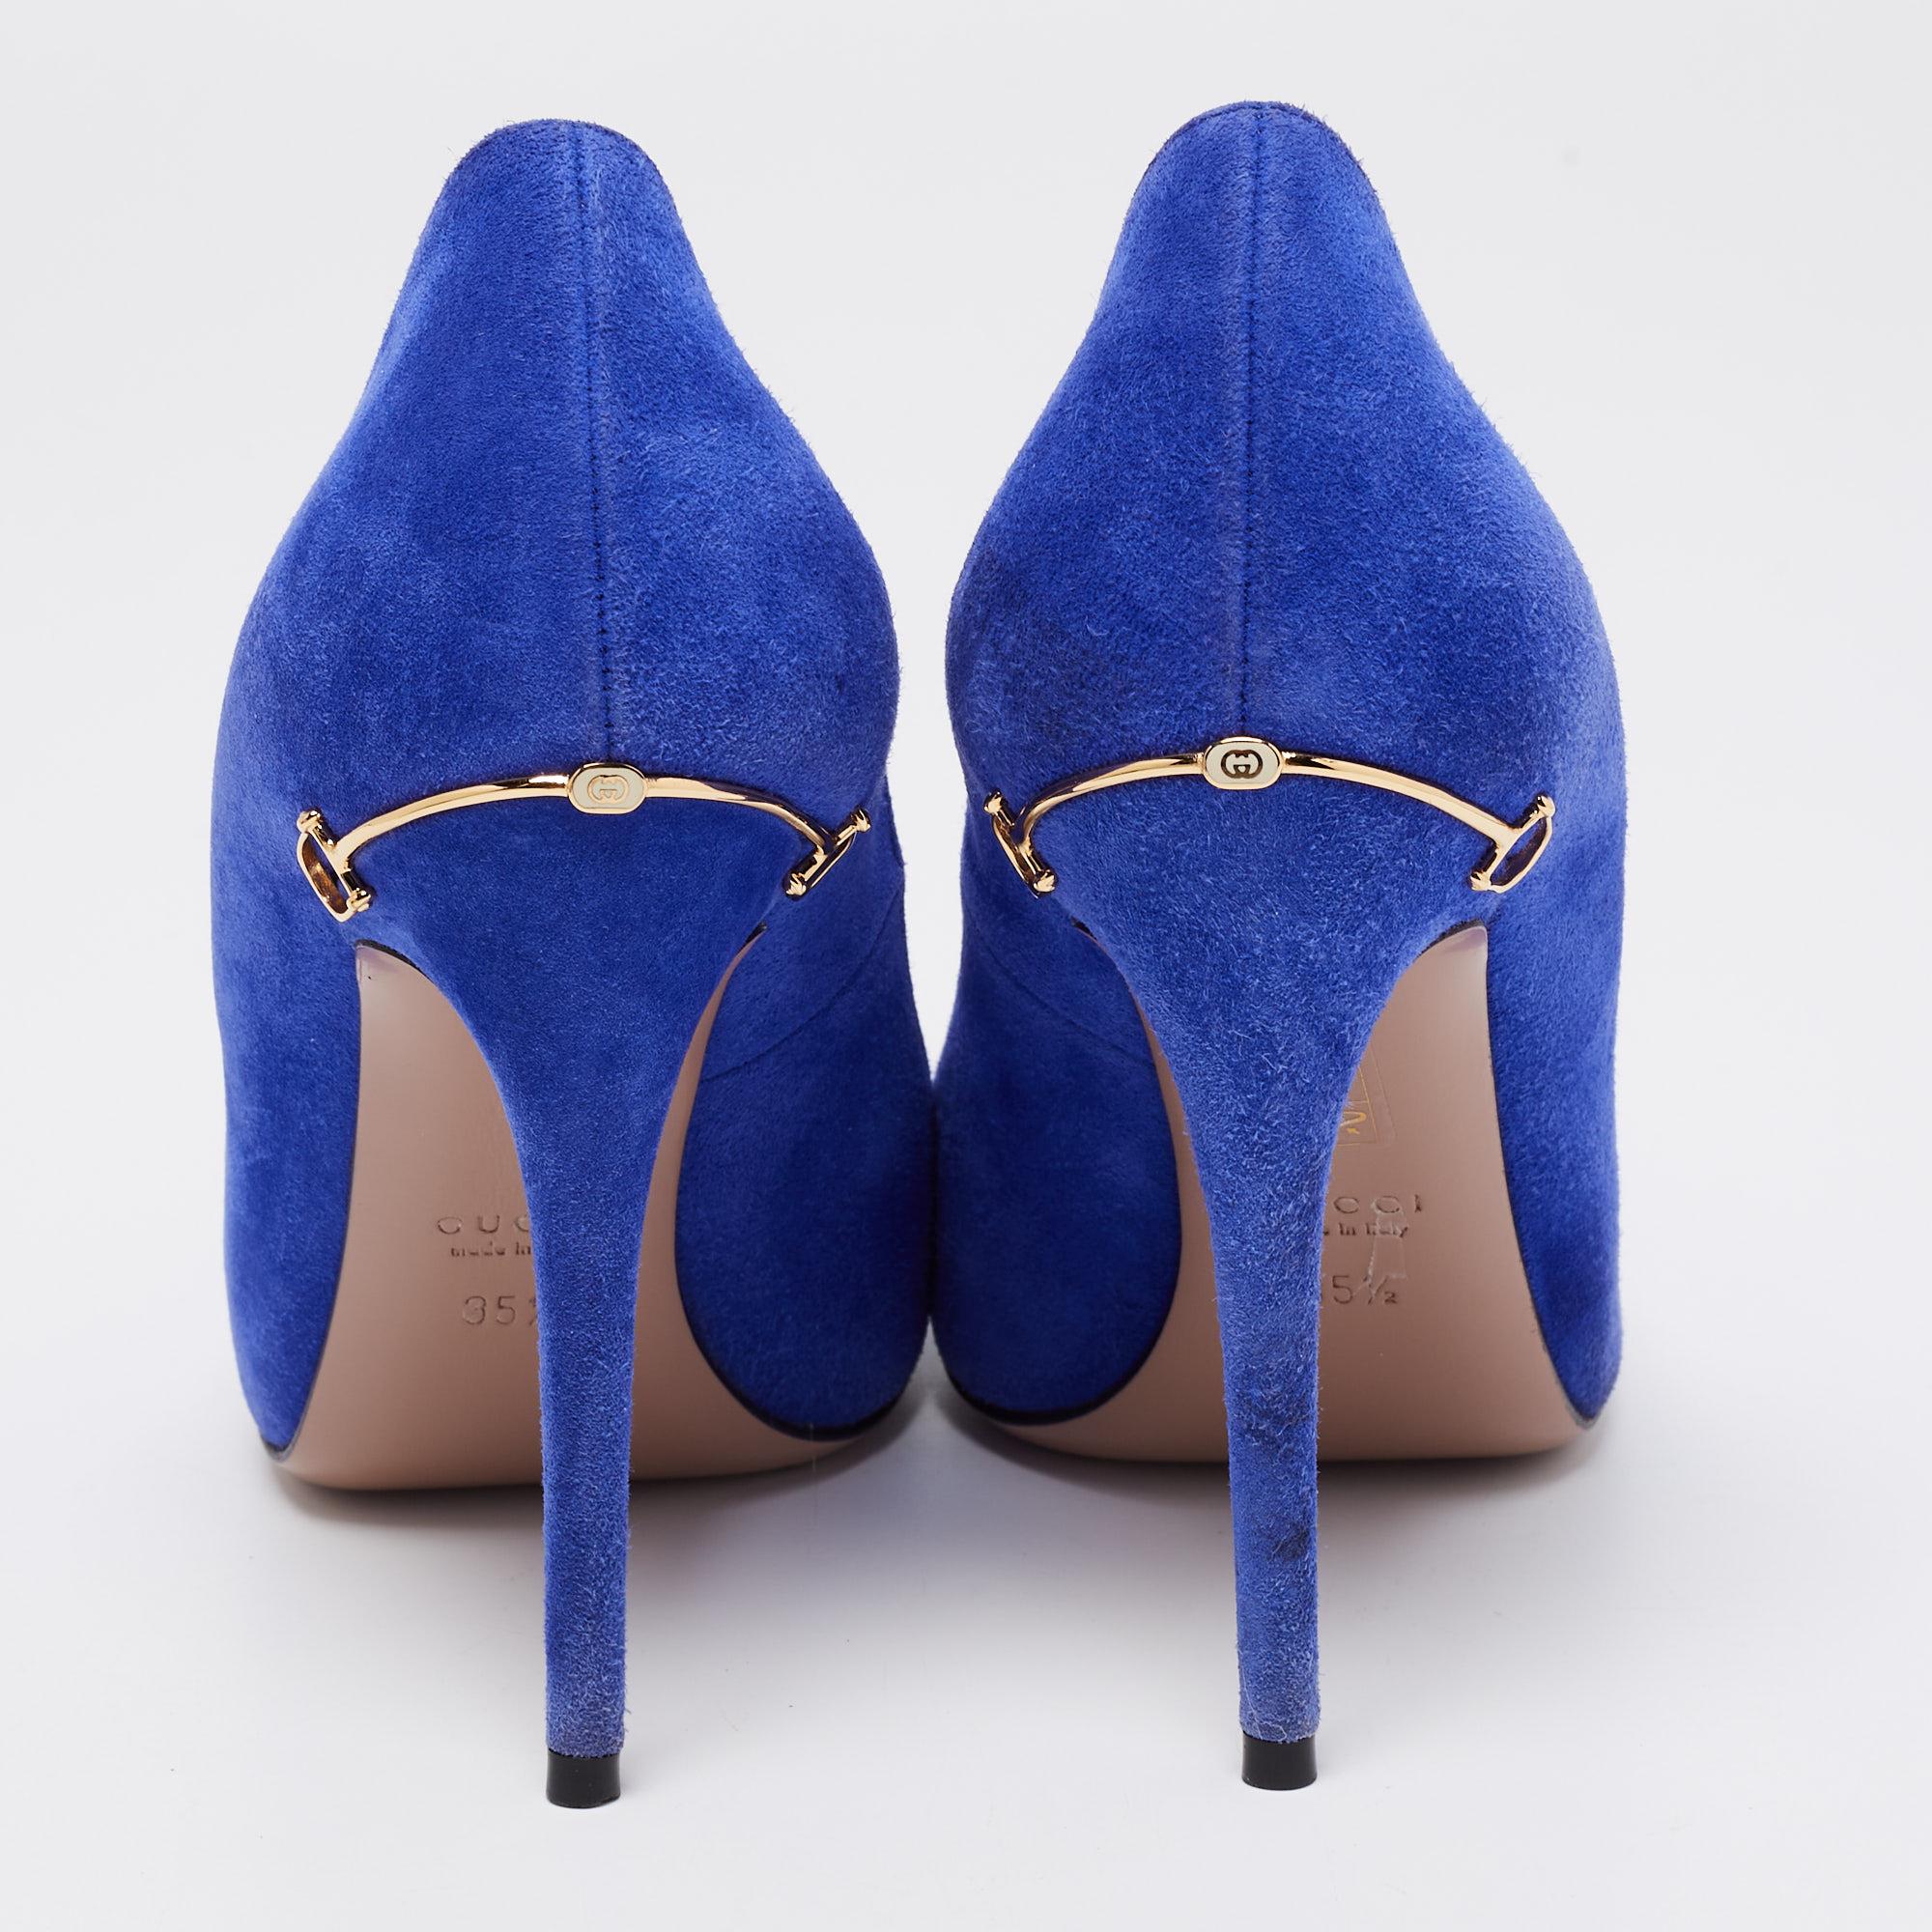 Gucci Blue Suede Pointed Toe Pumps Size 35.5 In Good Condition For Sale In Dubai, Al Qouz 2